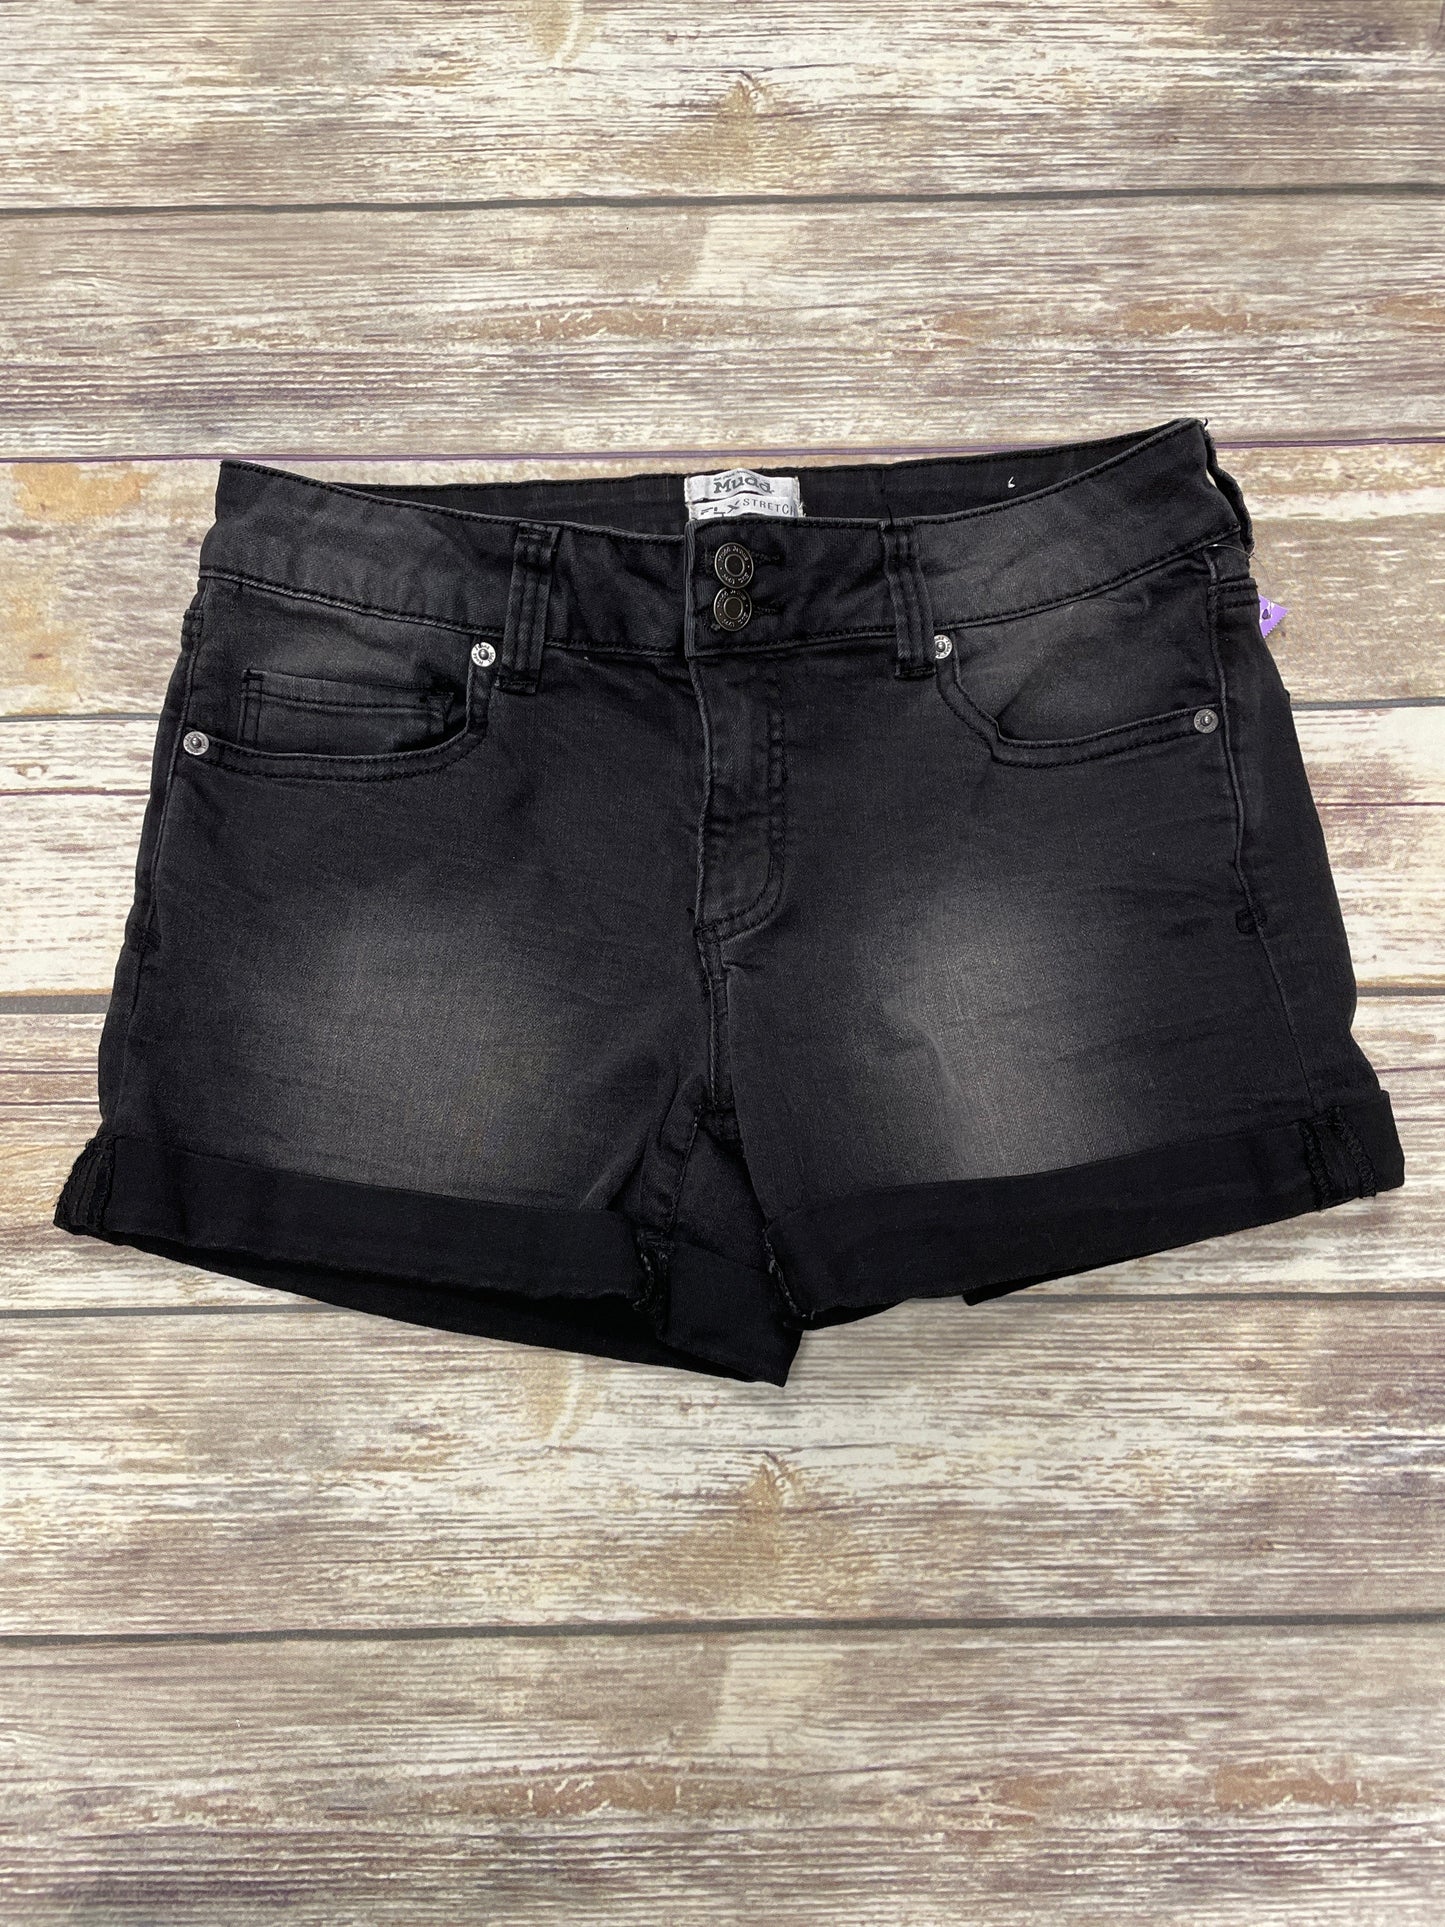 Black Denim Shorts Mudd, Size 12